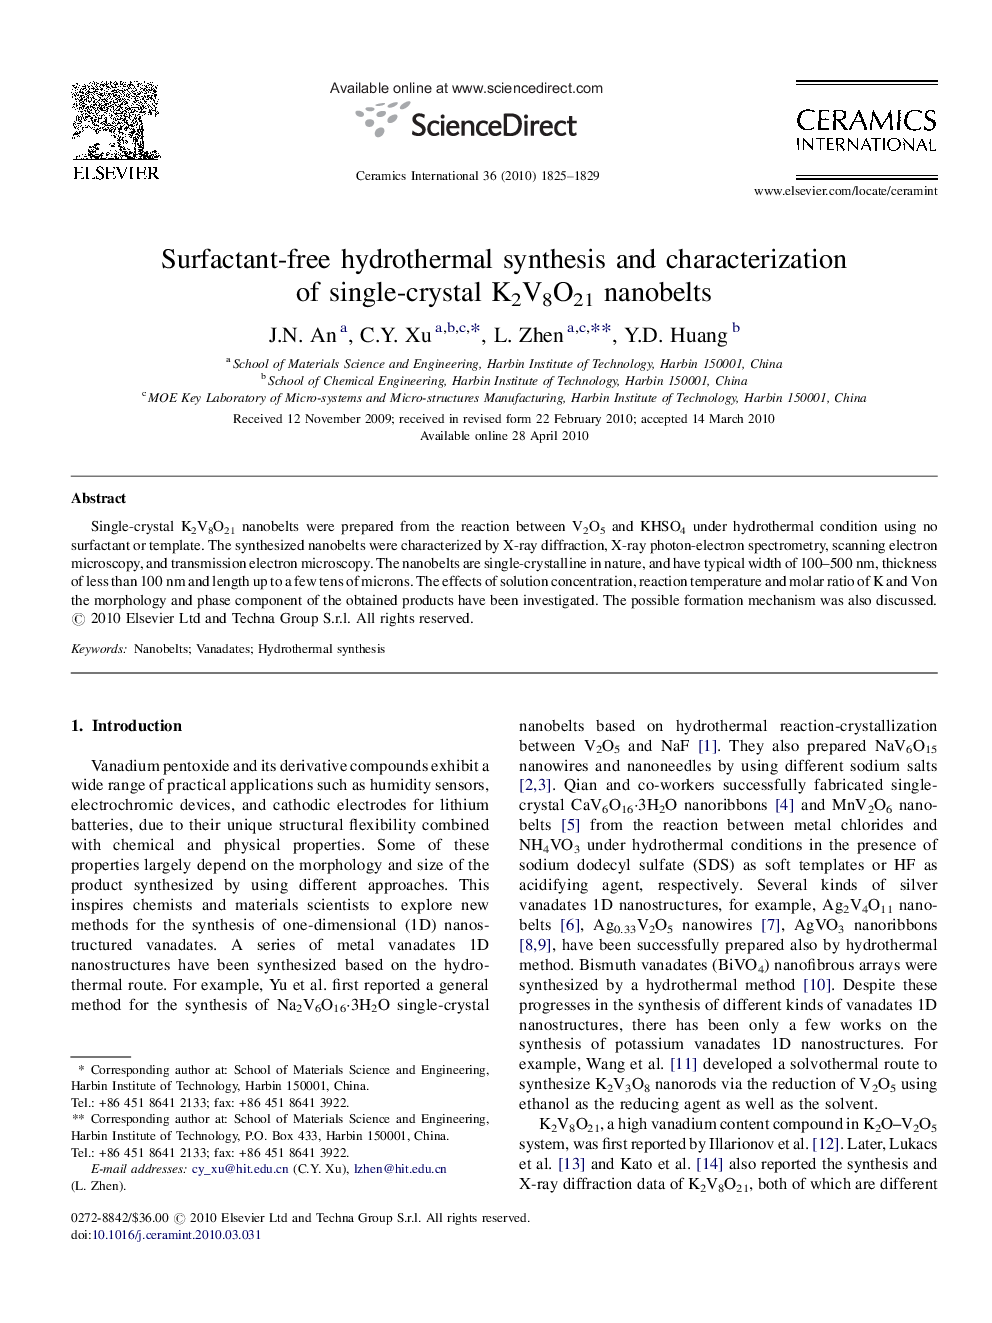 Surfactant-free hydrothermal synthesis and characterization of single-crystal K2V8O21 nanobelts